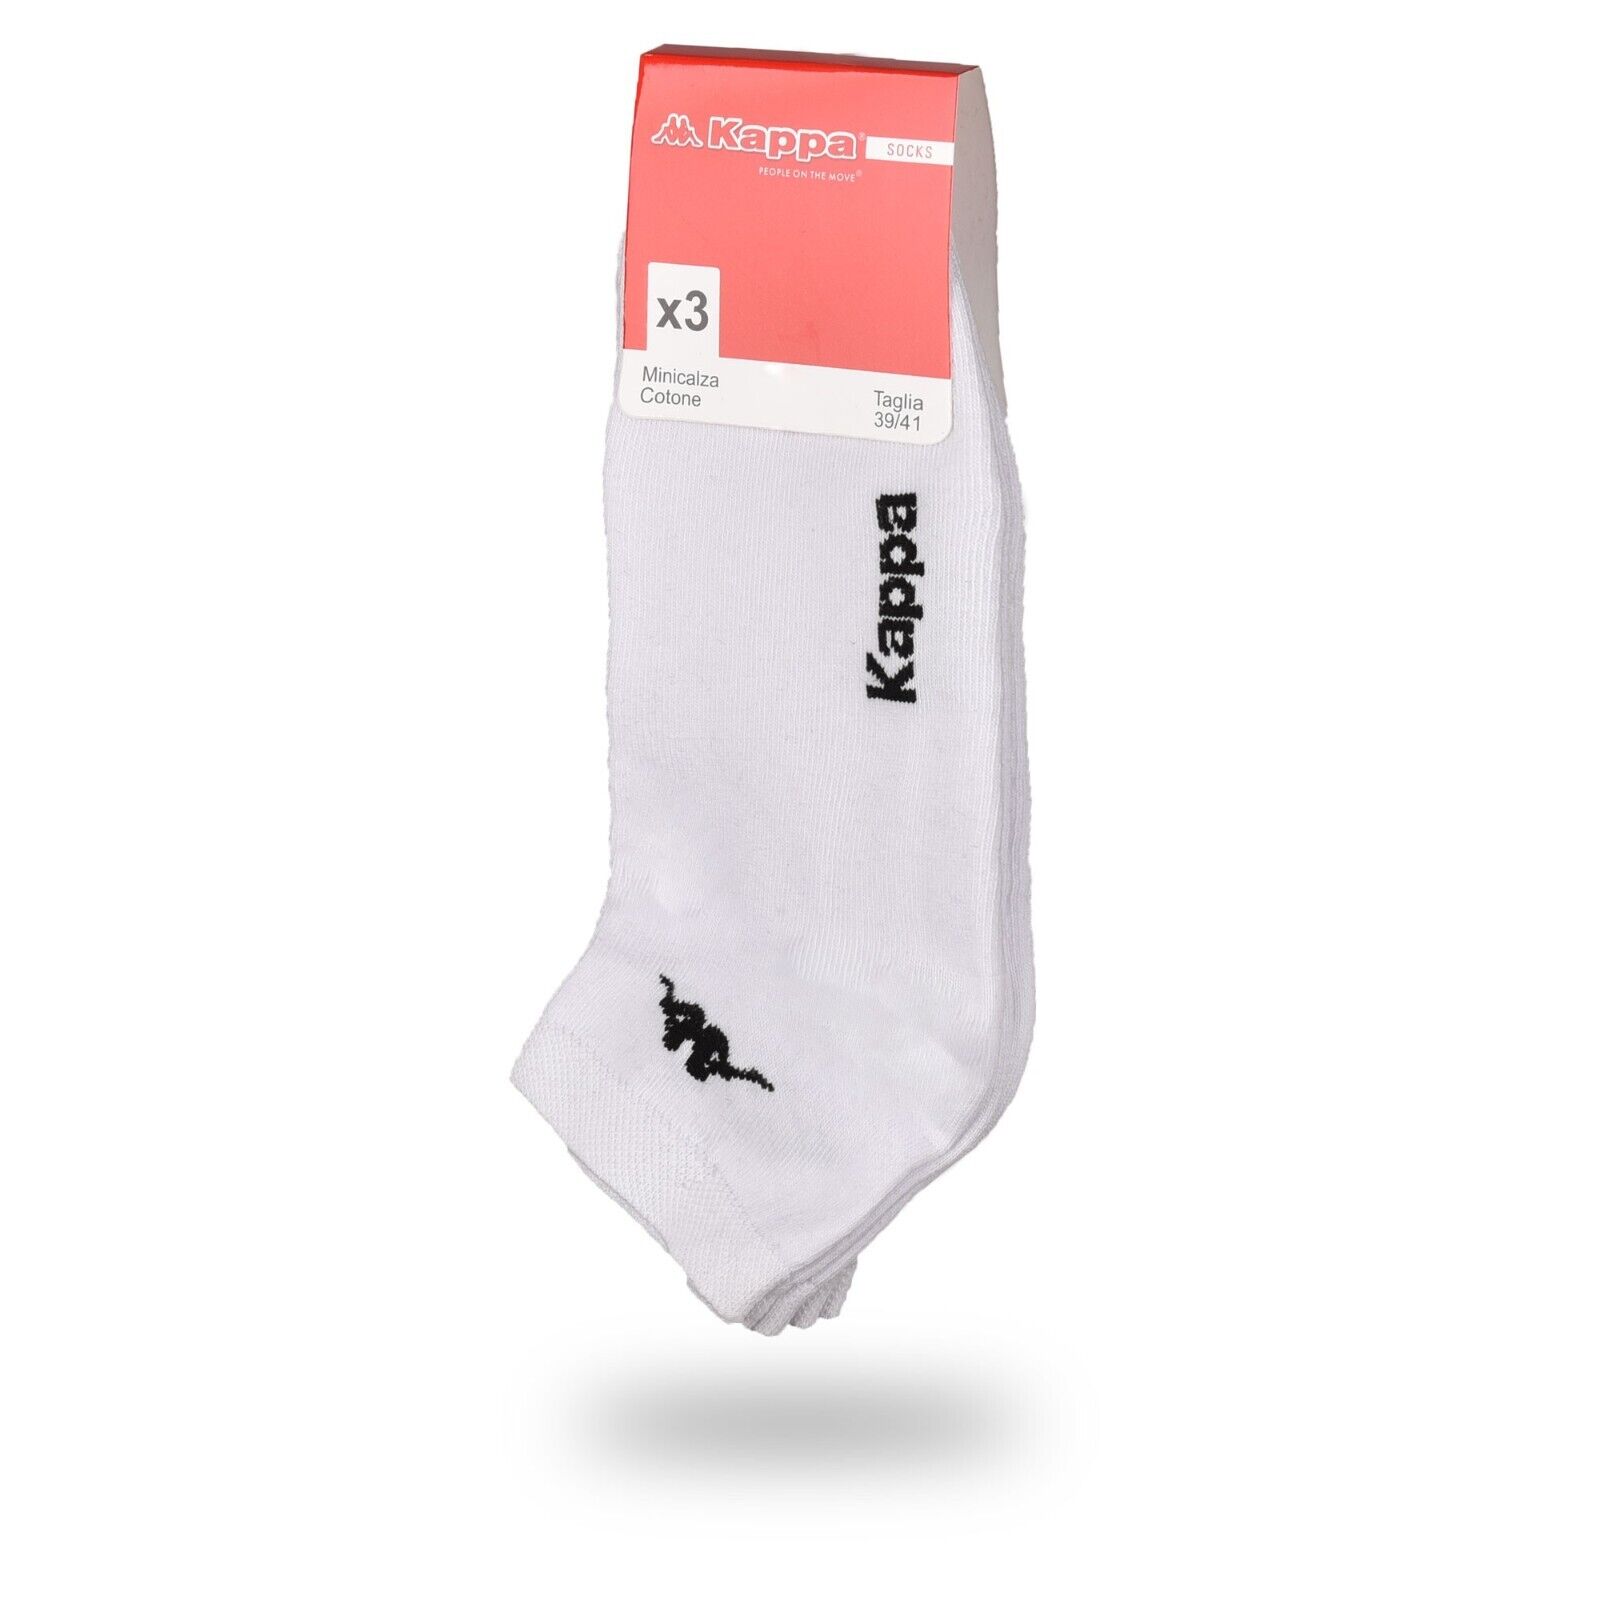 Prooi binden Stadium 3 Pairs Of Half Socks From Man Woman Unisex Stretch Cotton Kappa K004 | eBay